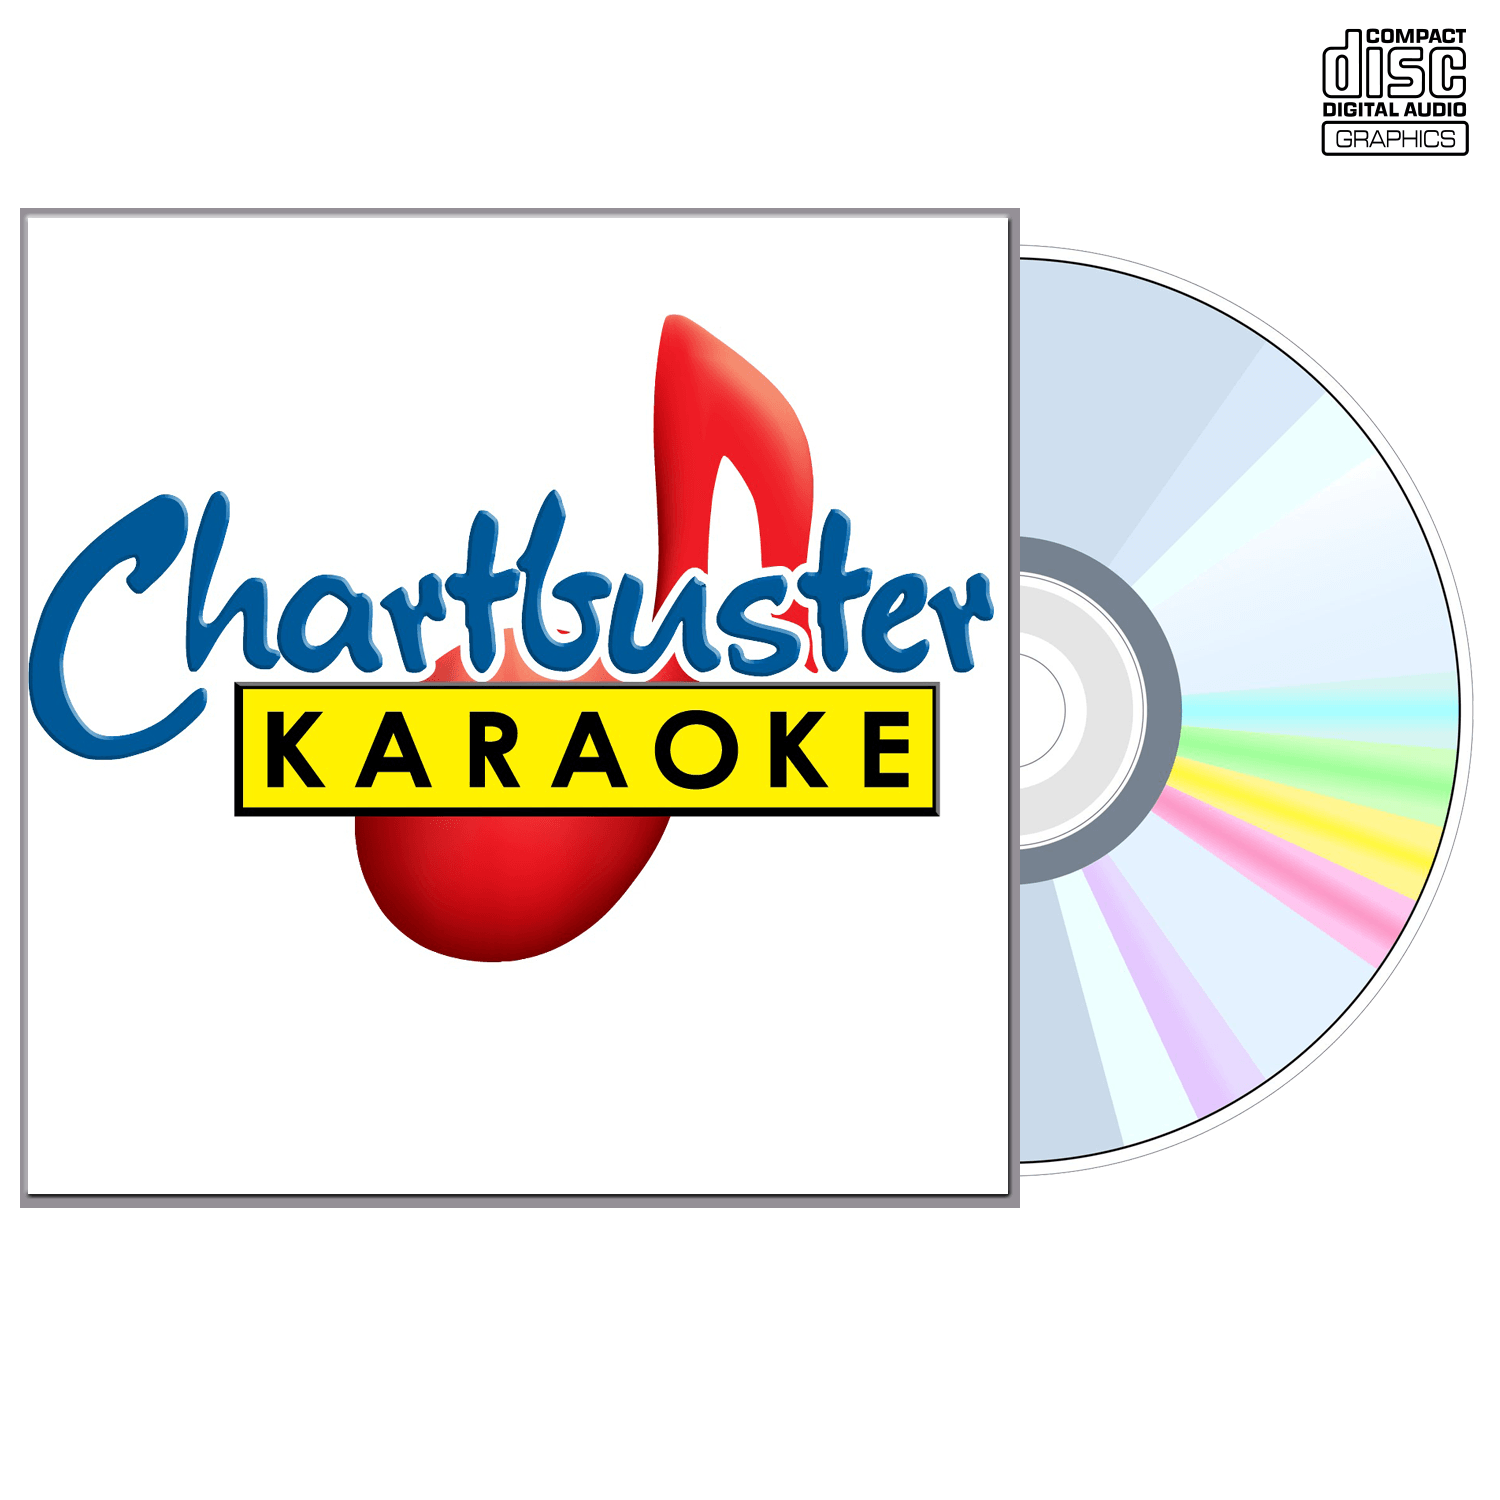 Taylor Swift Vol 1 - CD+G - Chartbuster Karaoke - Karaoke Home Entertainment